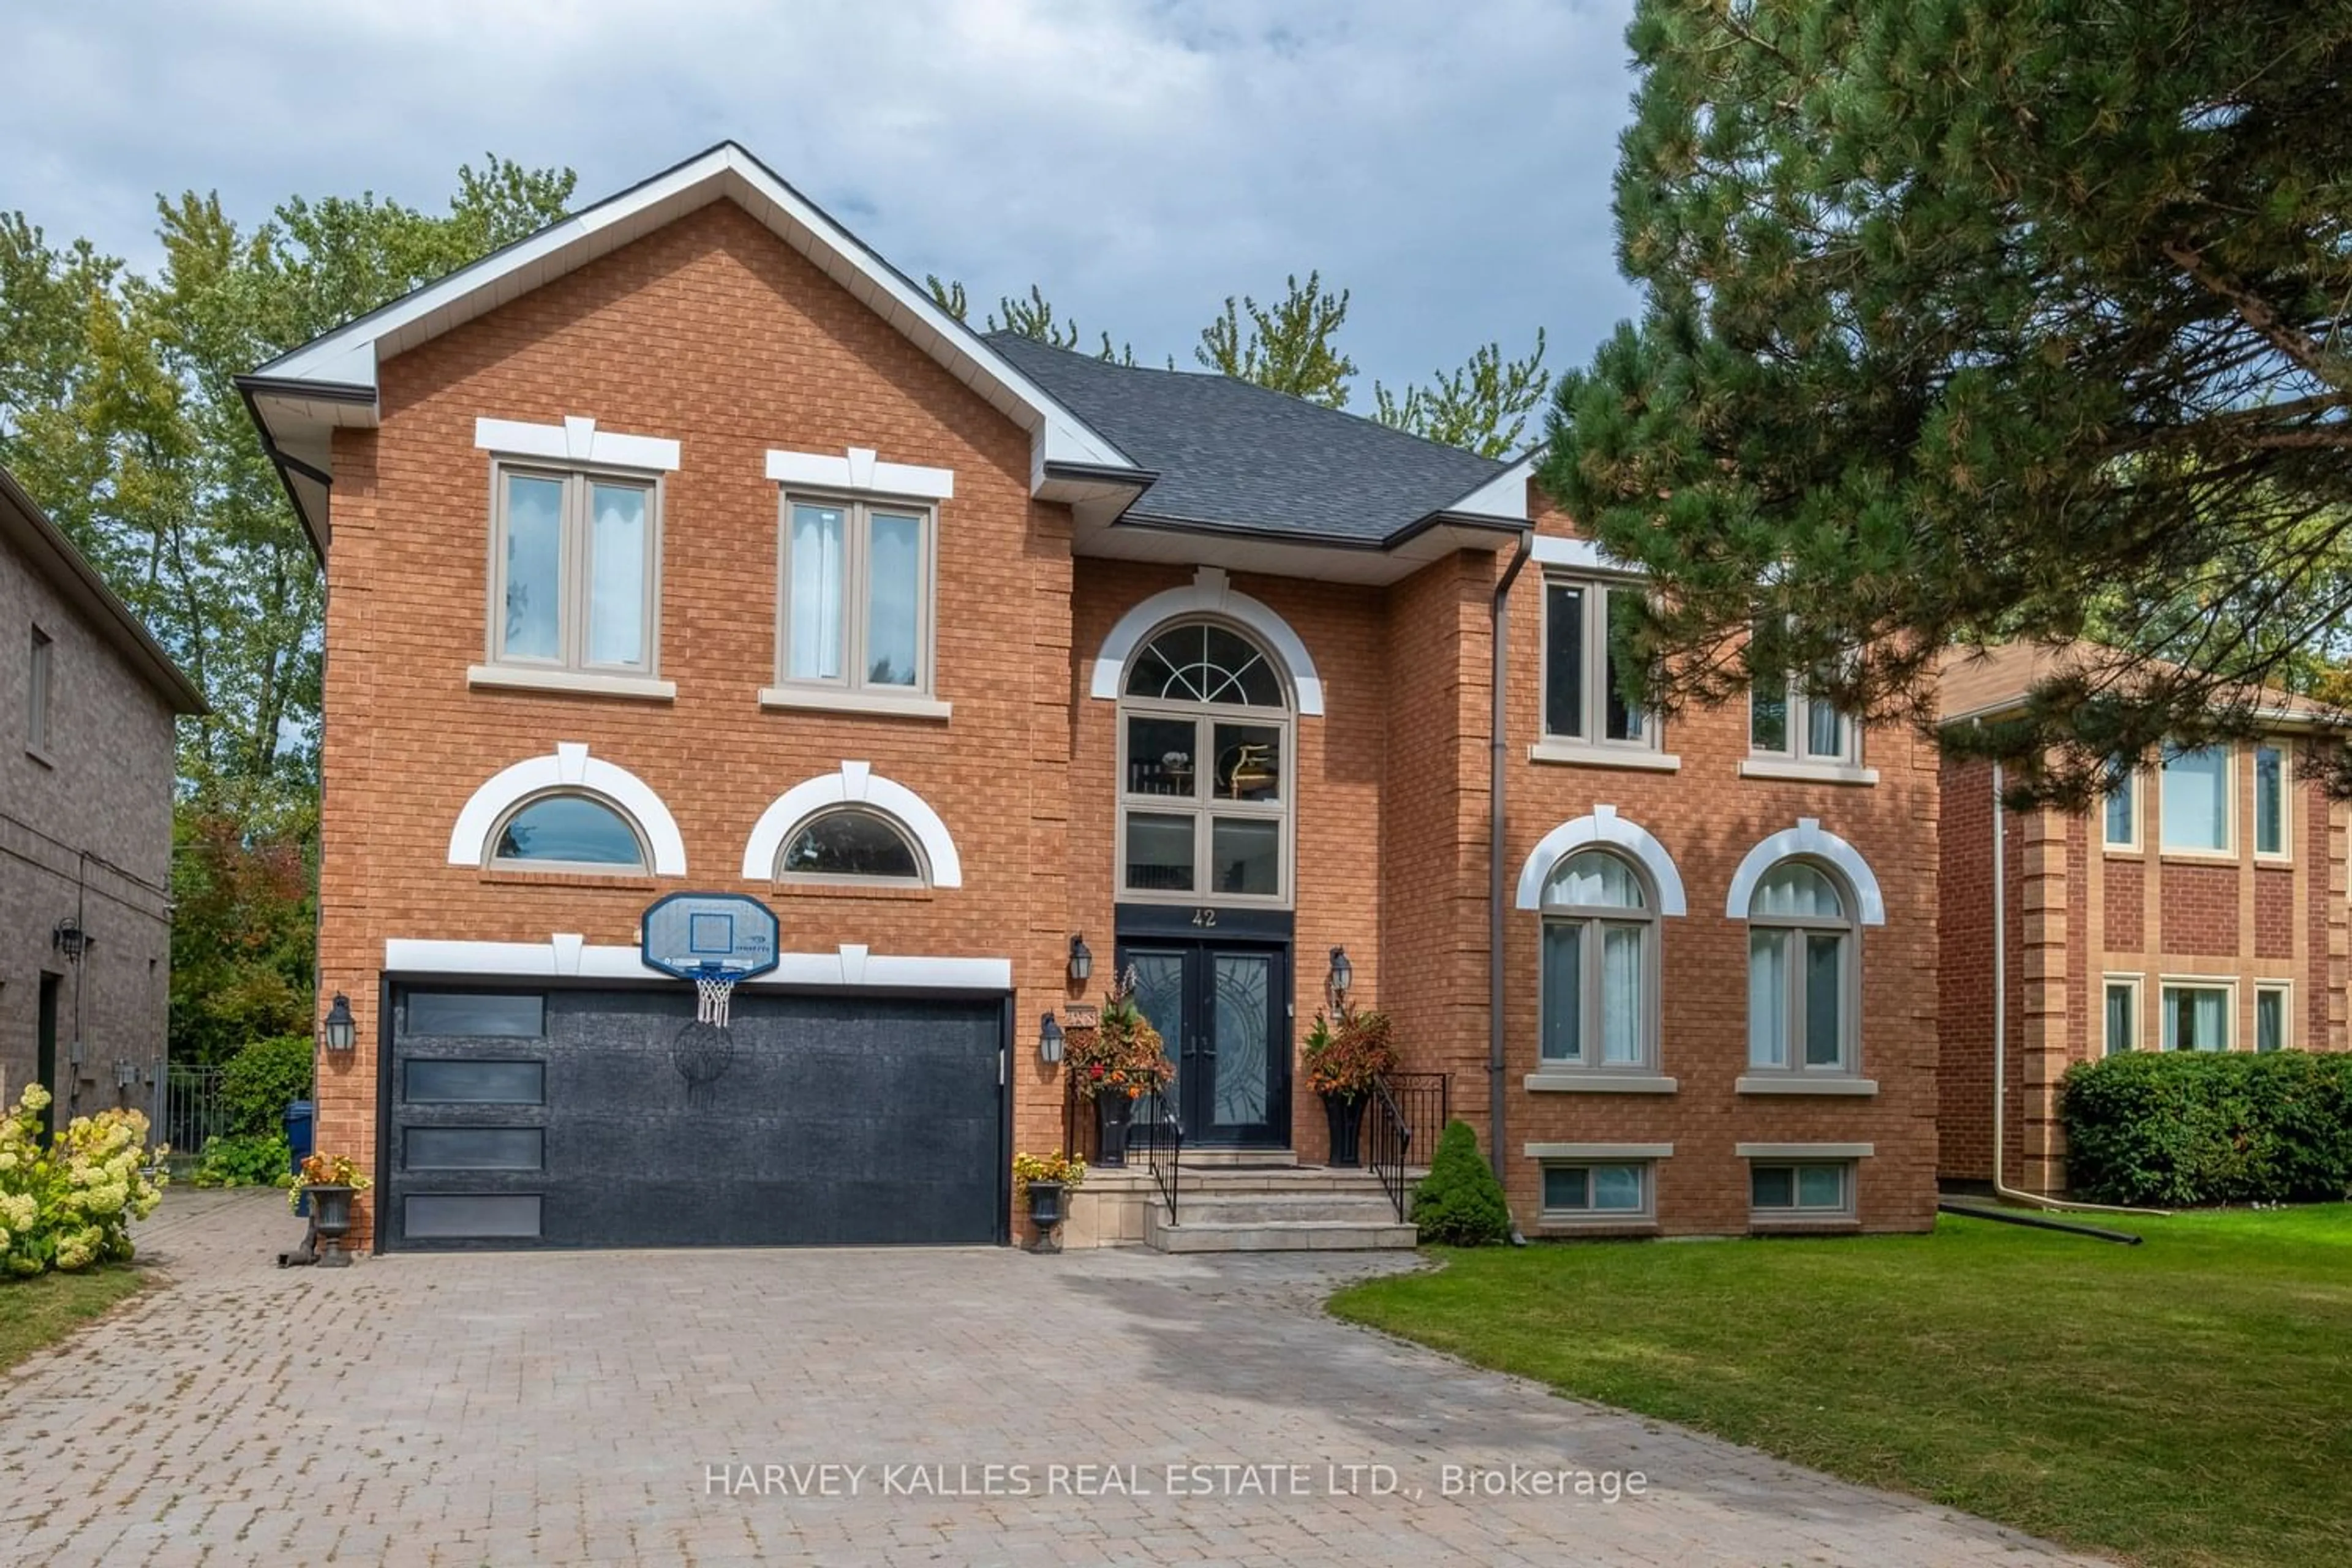 Home with brick exterior material for 42 Grangemill Cres, Toronto Ontario M3B 2J2